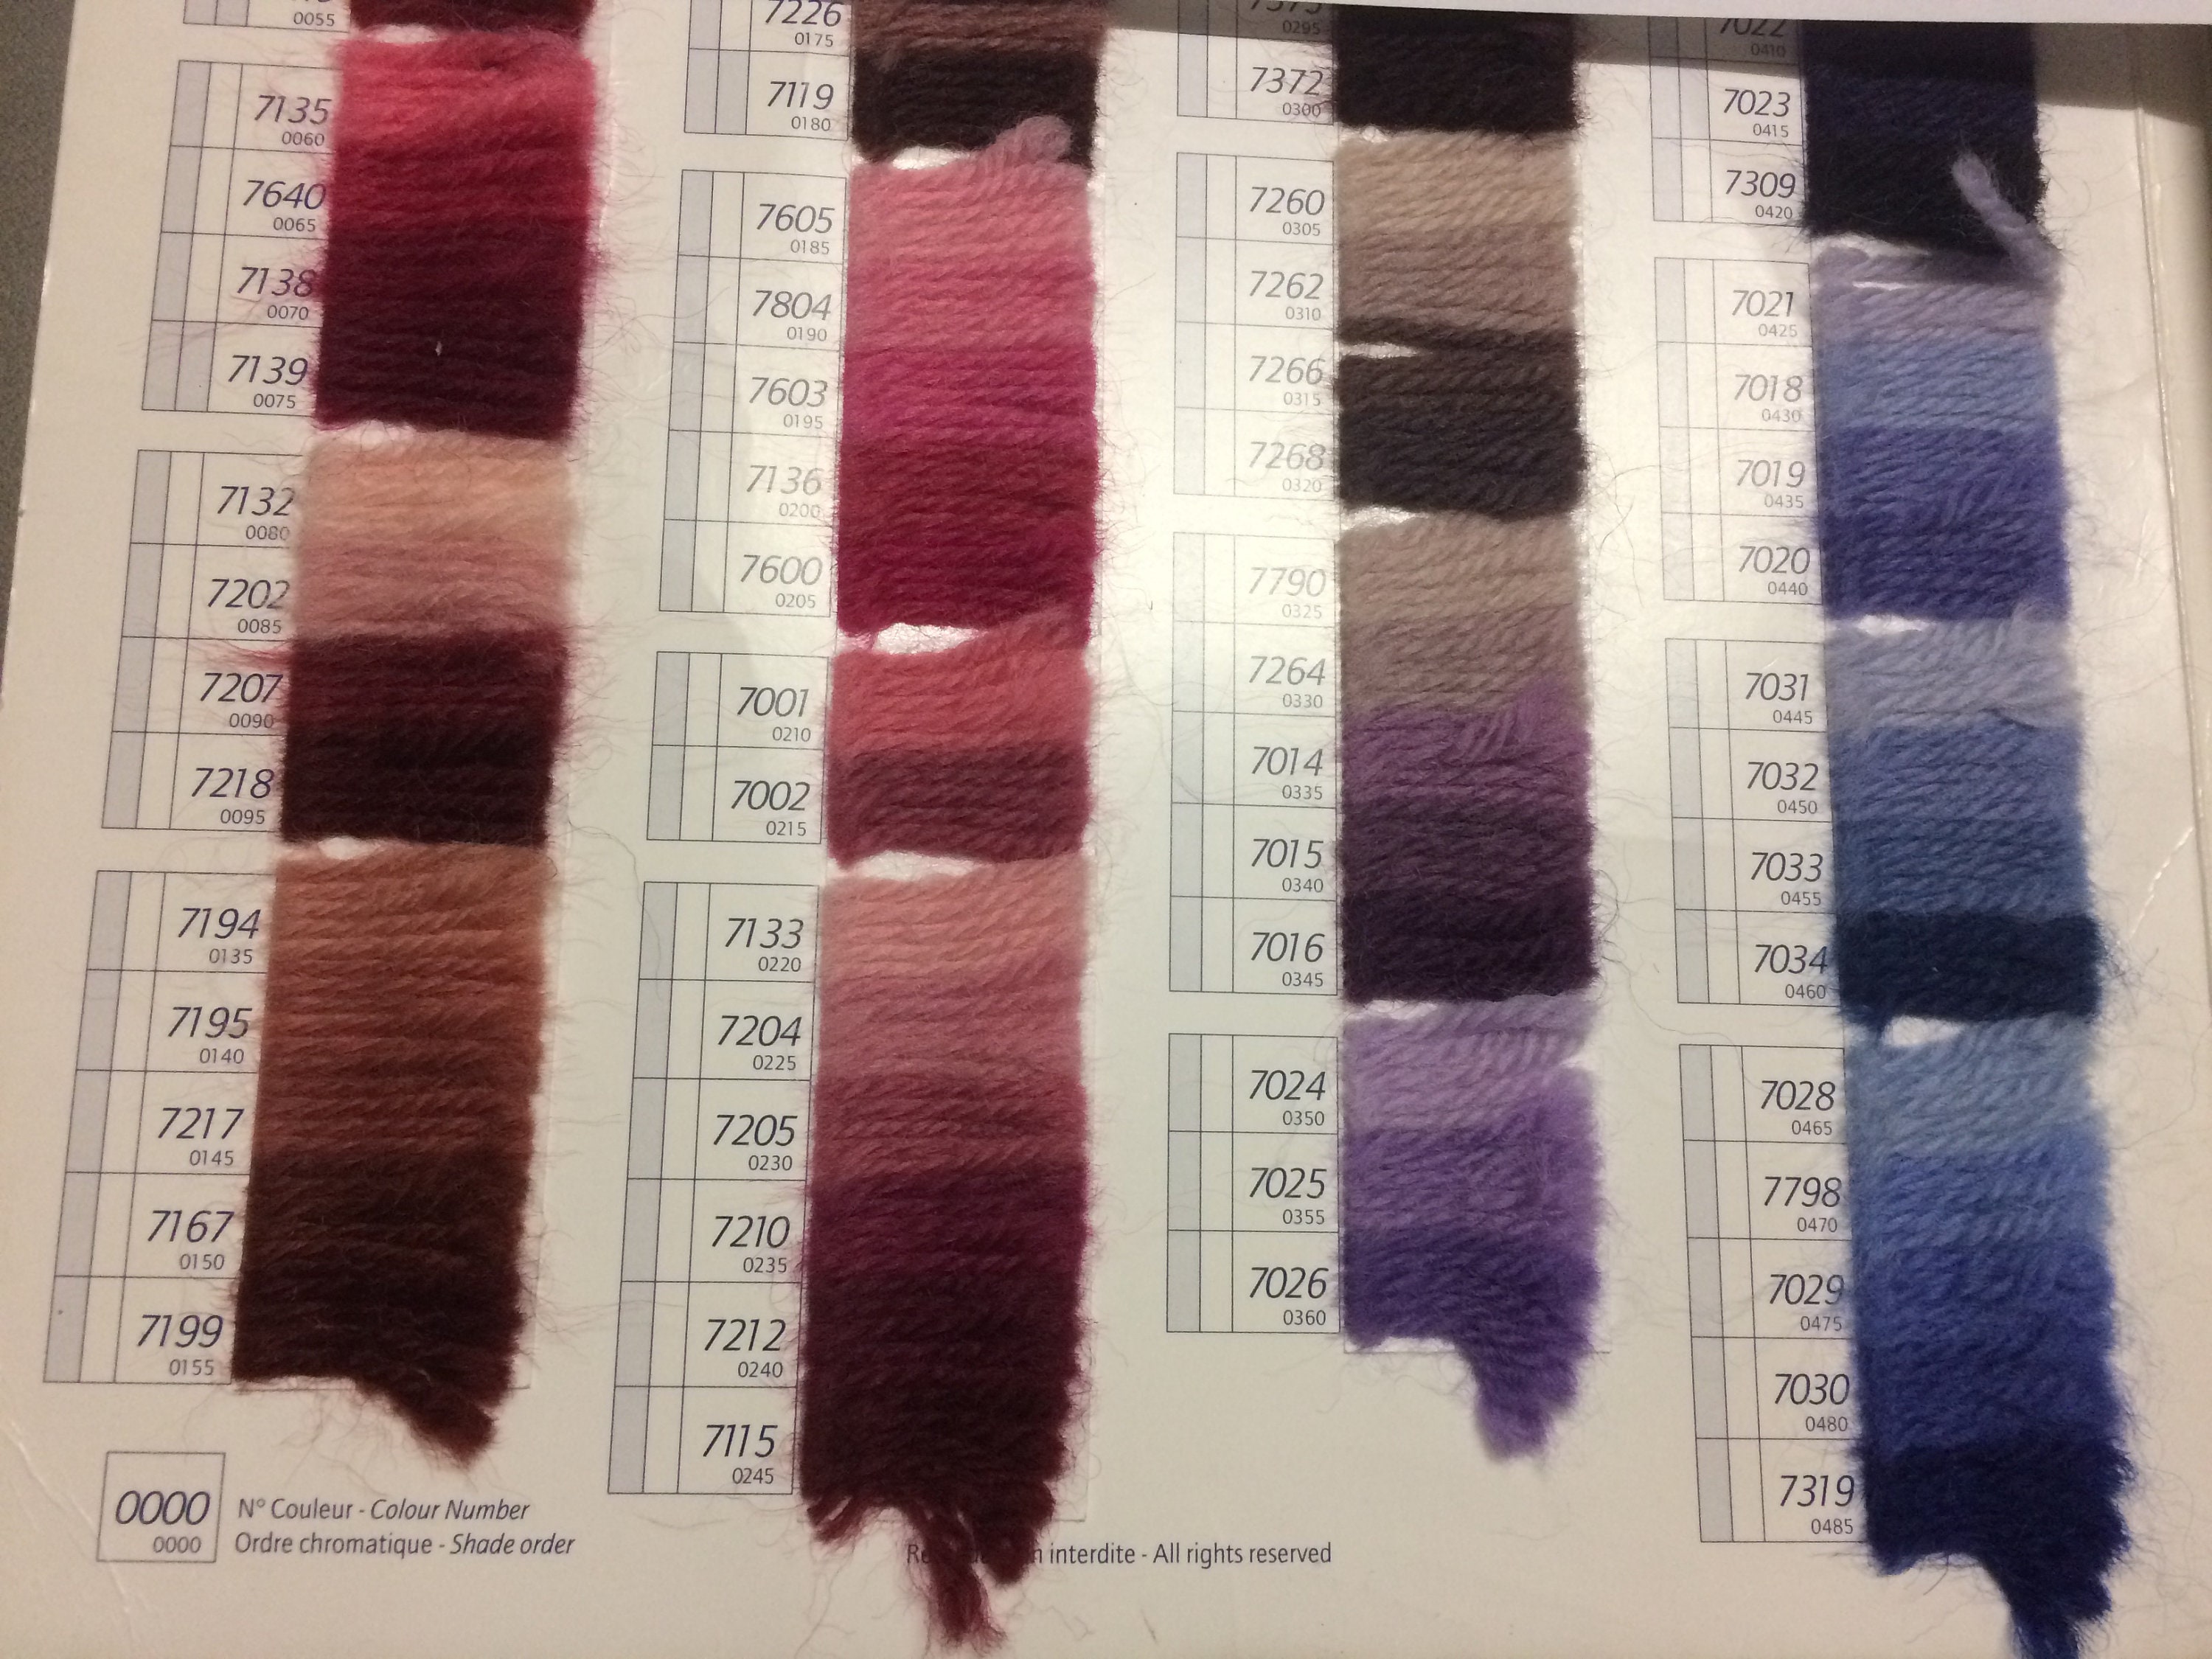 colbert-wool-dmc-tapestry-colors-7308-to-7457-etsy